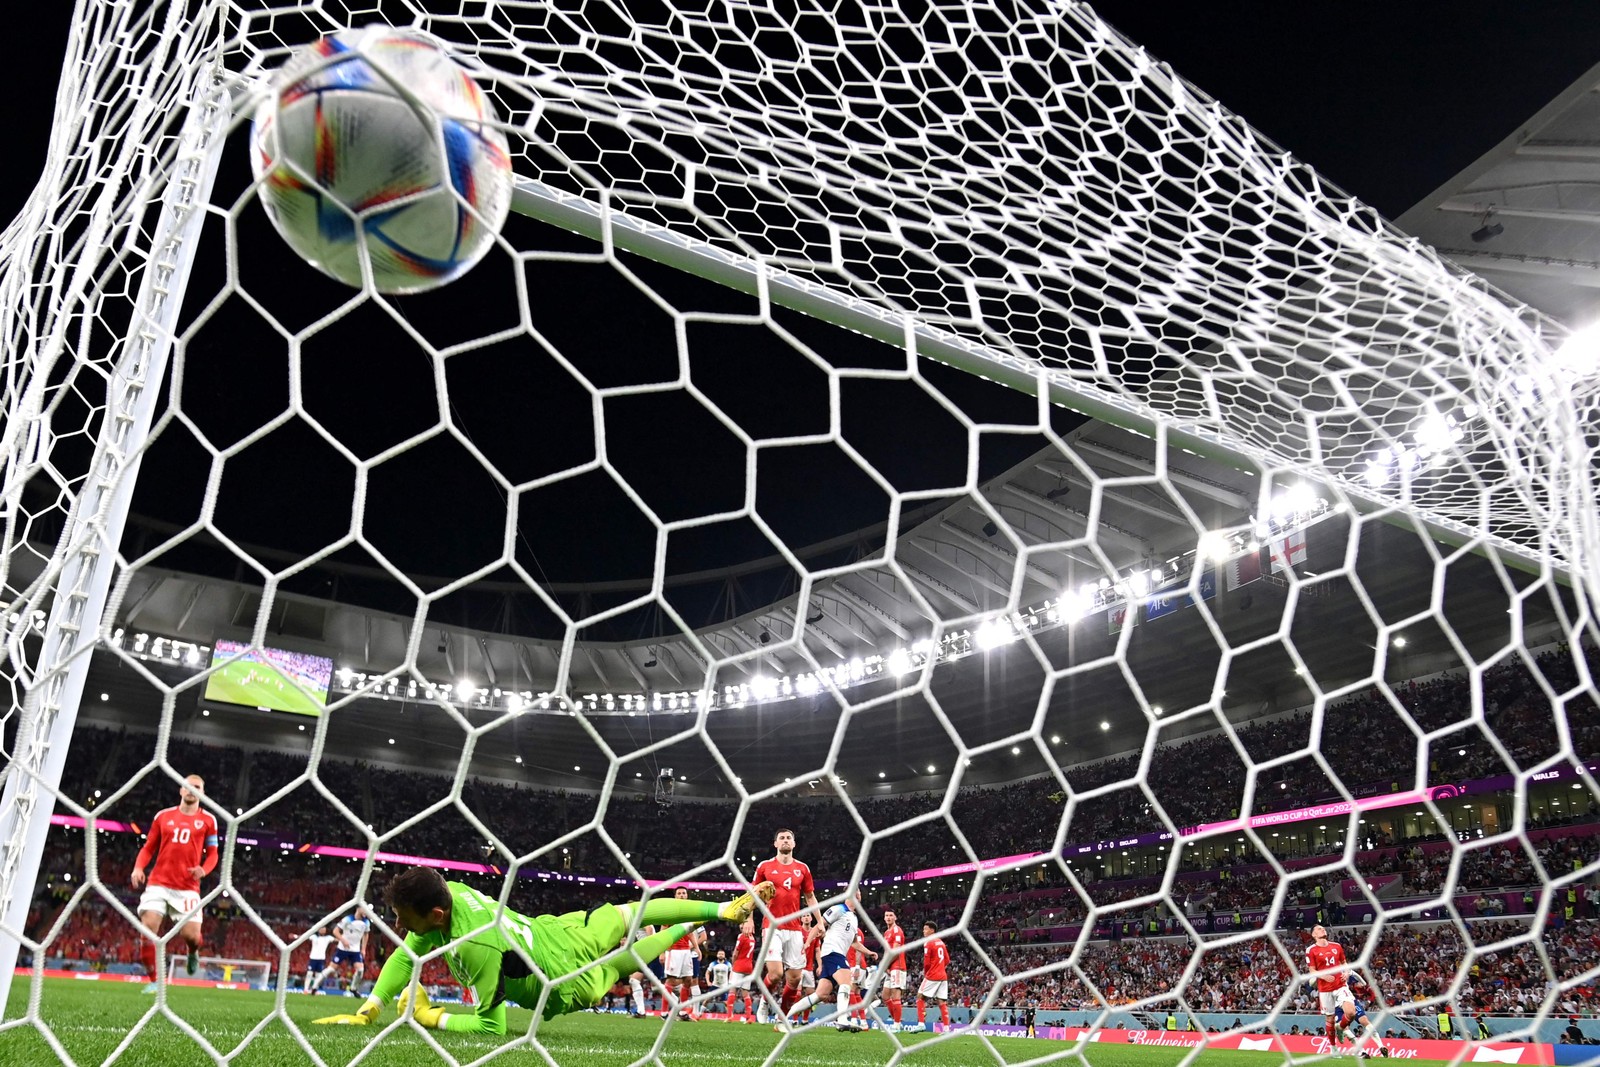 O goleiro do País de Gales, Danny Ward, sofre gol do atacante inglês Marcus Rashford  — Foto: Paul ELLIS / AFP